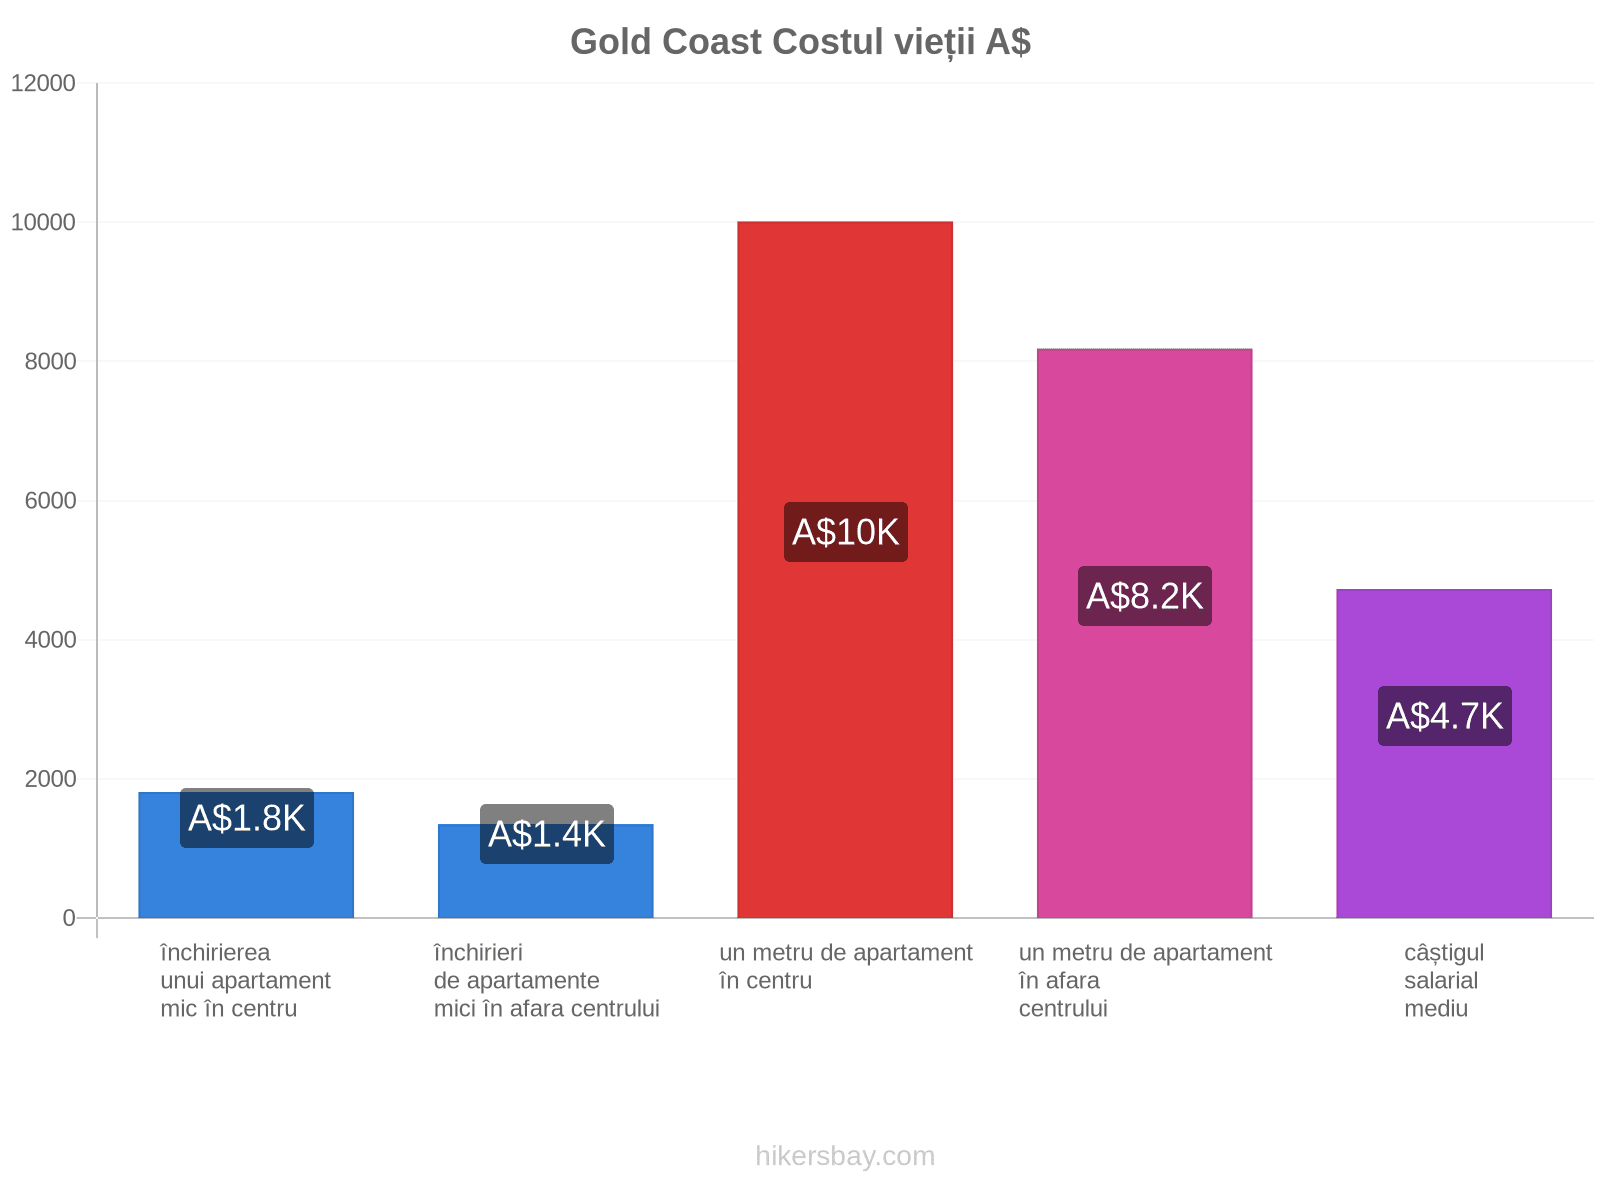 Gold Coast costul vieții hikersbay.com